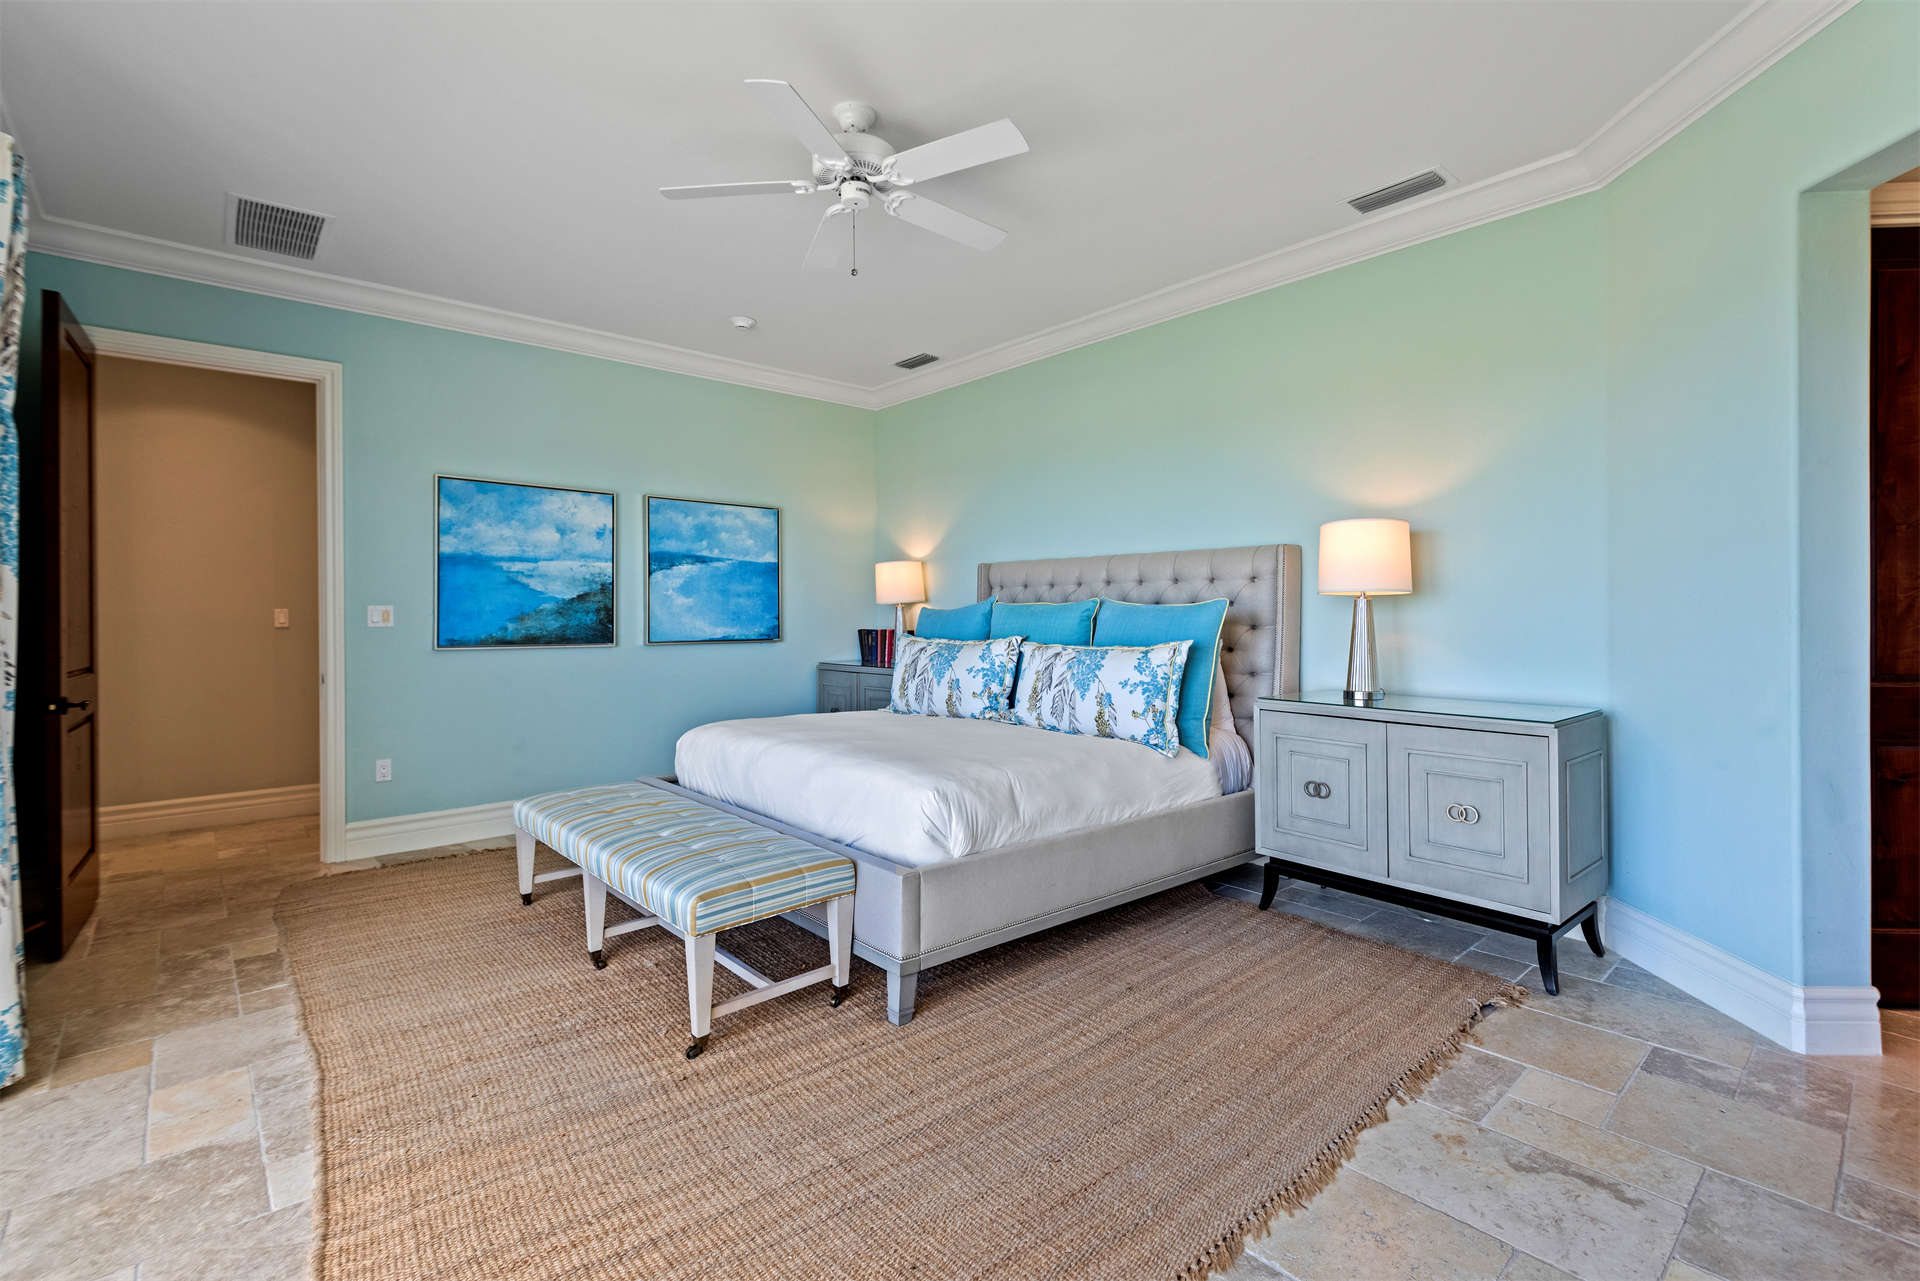 31. Condo / Townhome / Villa for Sale at Emerald Bay, Exuma Bahamas